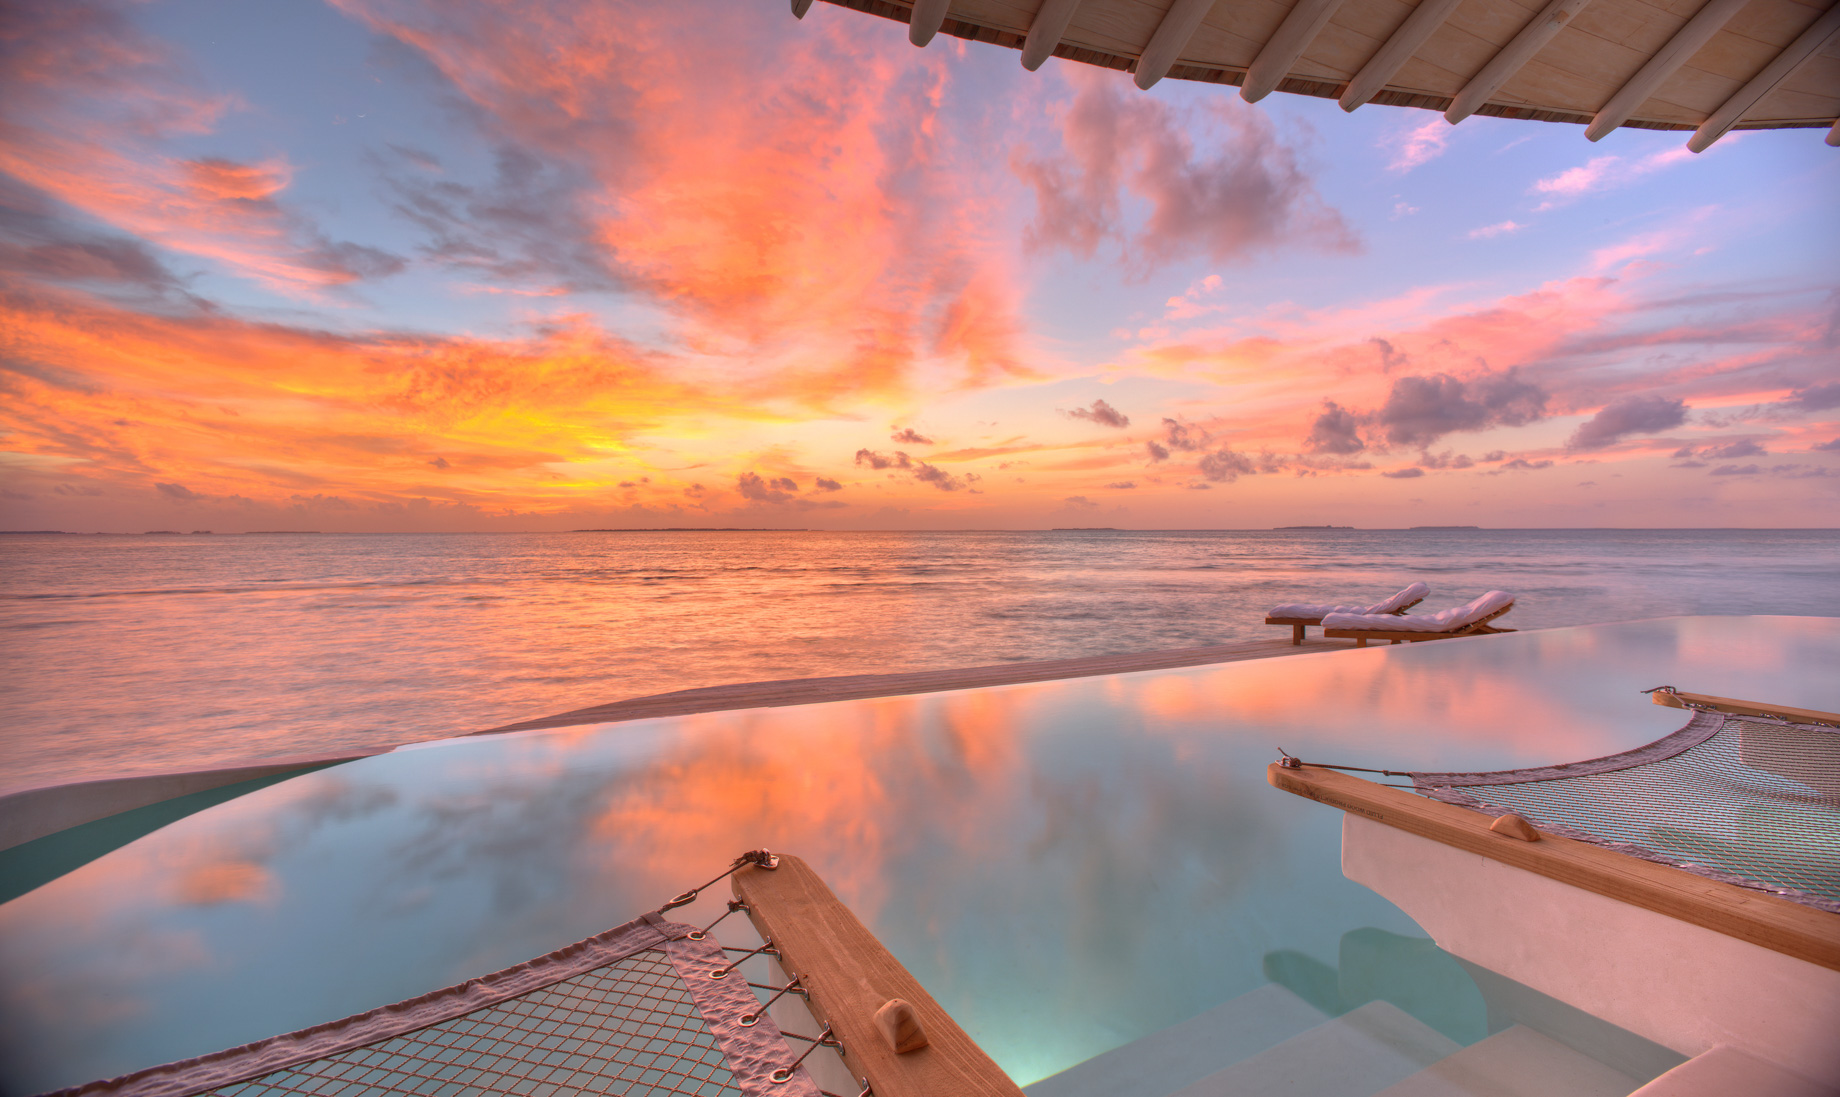 Soneva Jani Resort - Noonu Atoll, Medhufaru, Maldives - Overwater Villa Infinity Pool Sunset Oceanview